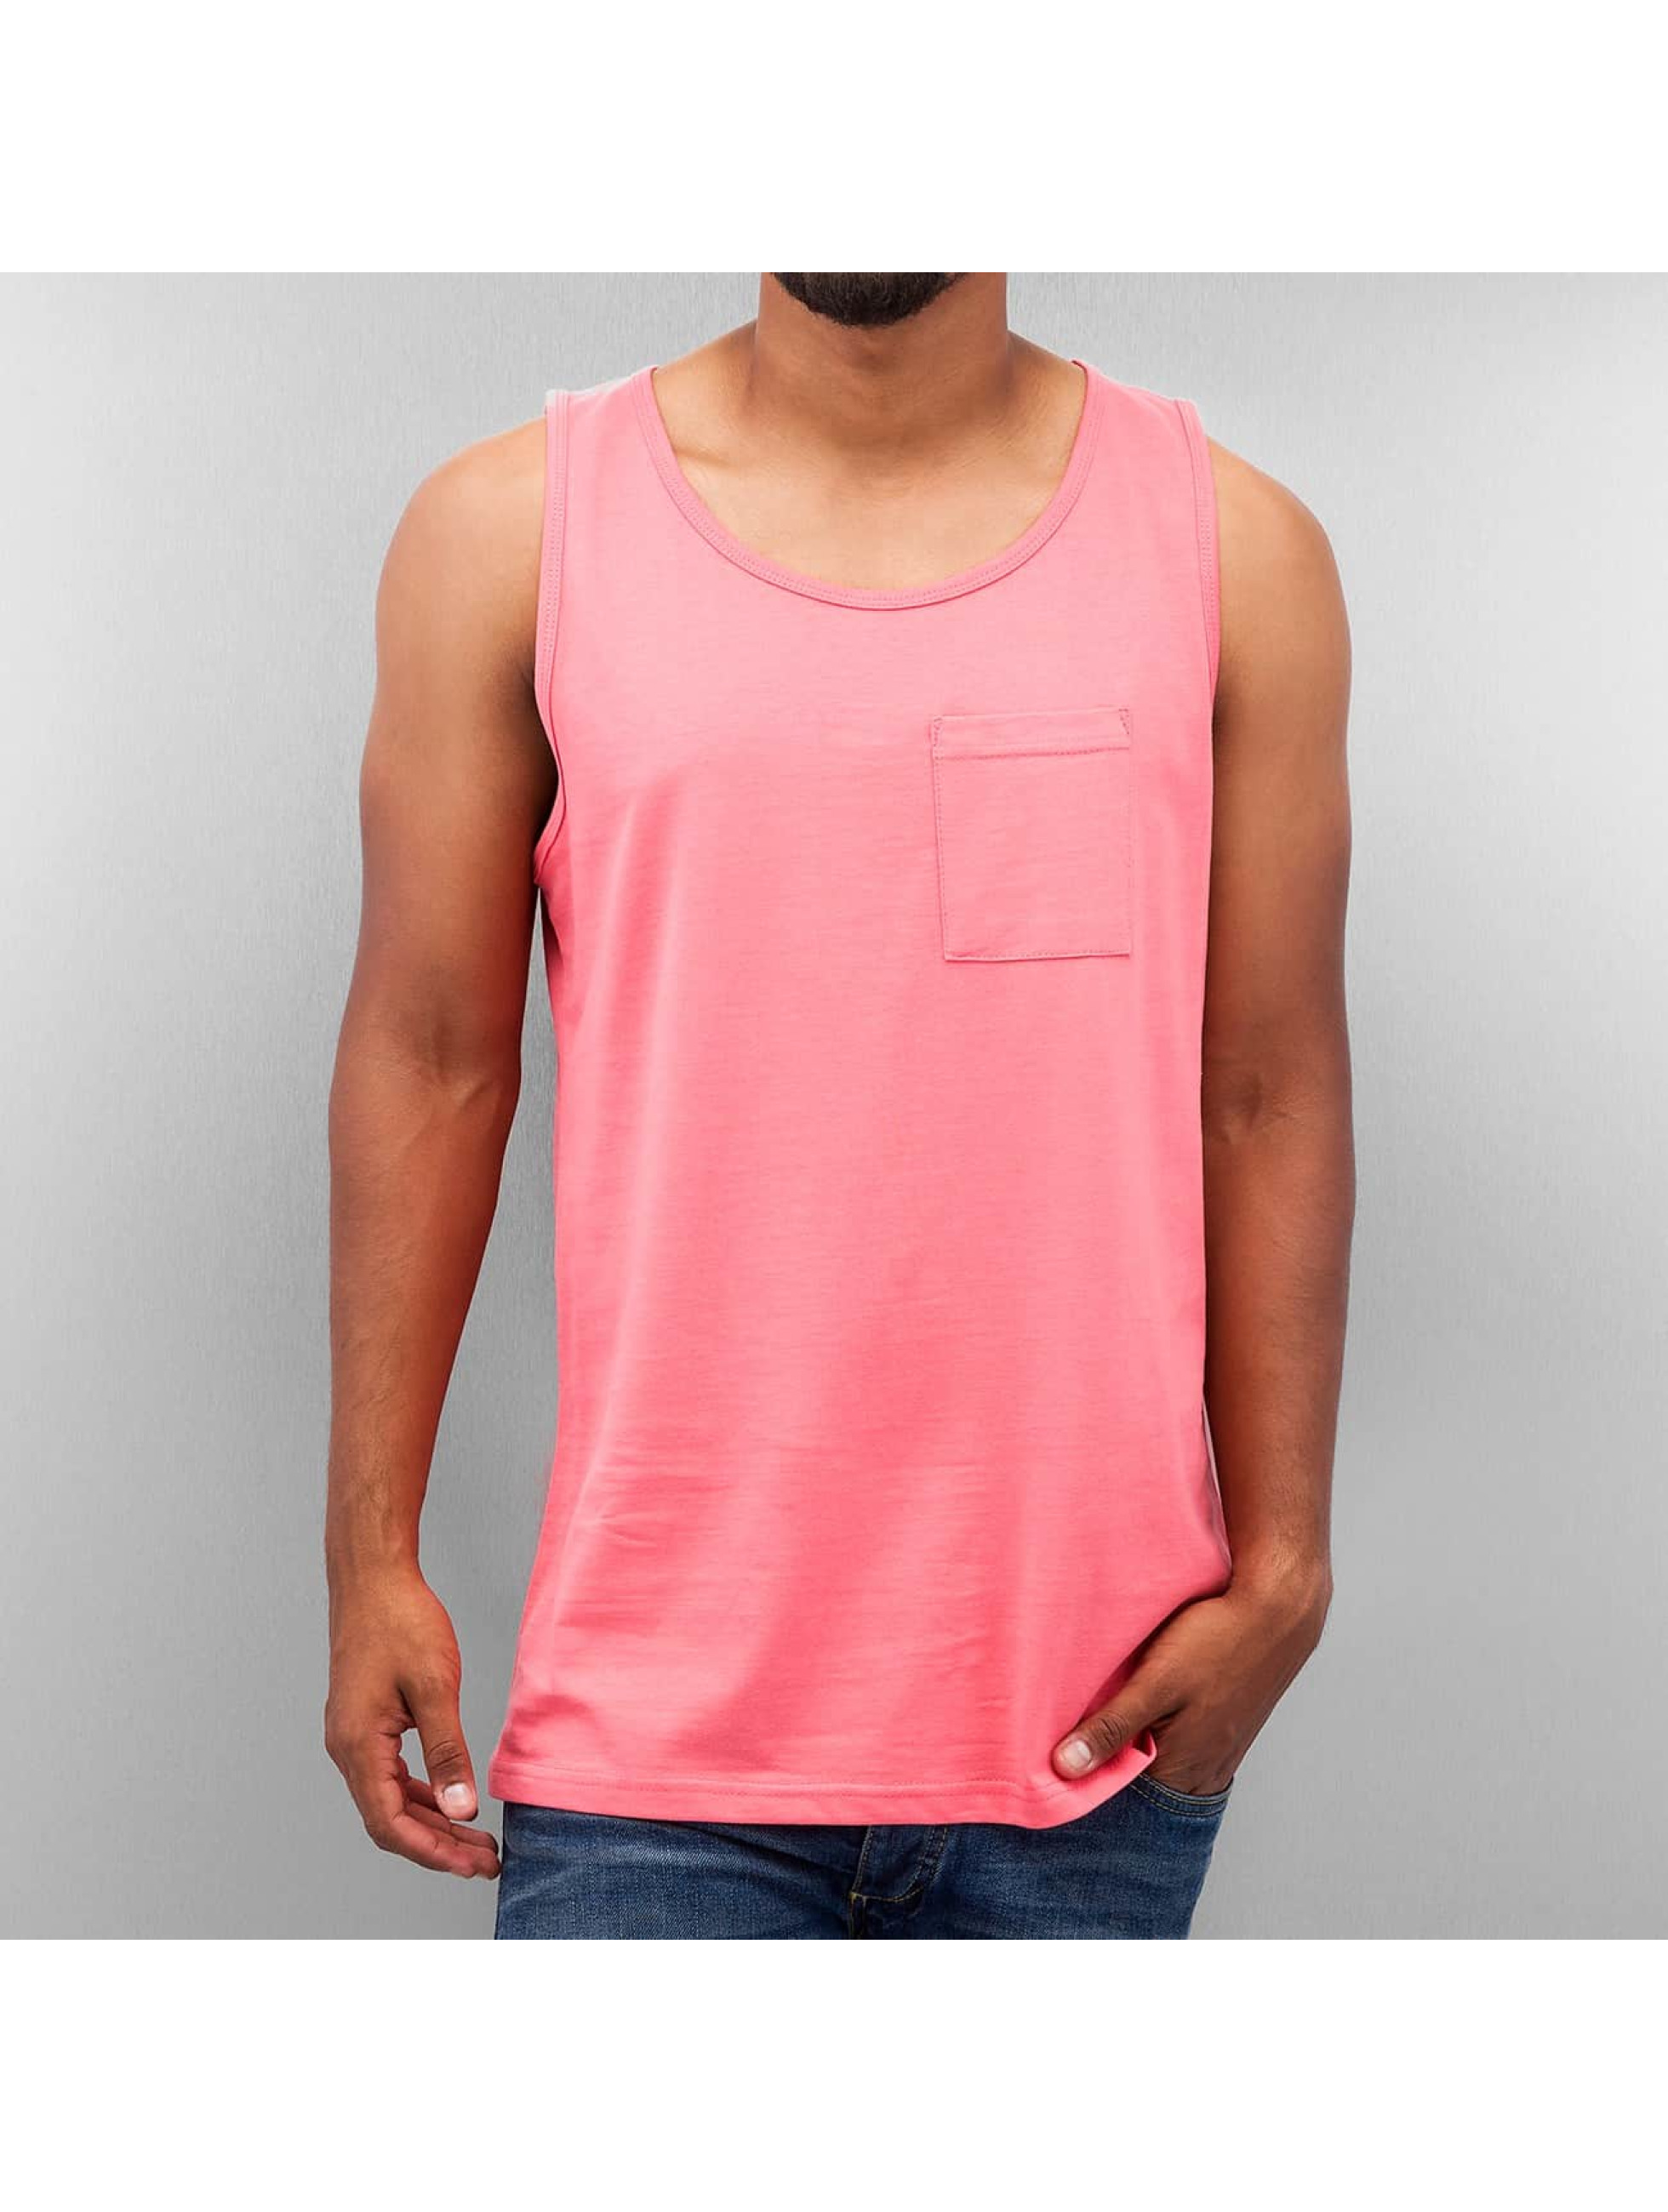 Oberteil / Tank Tops Breast Pocket in rosa